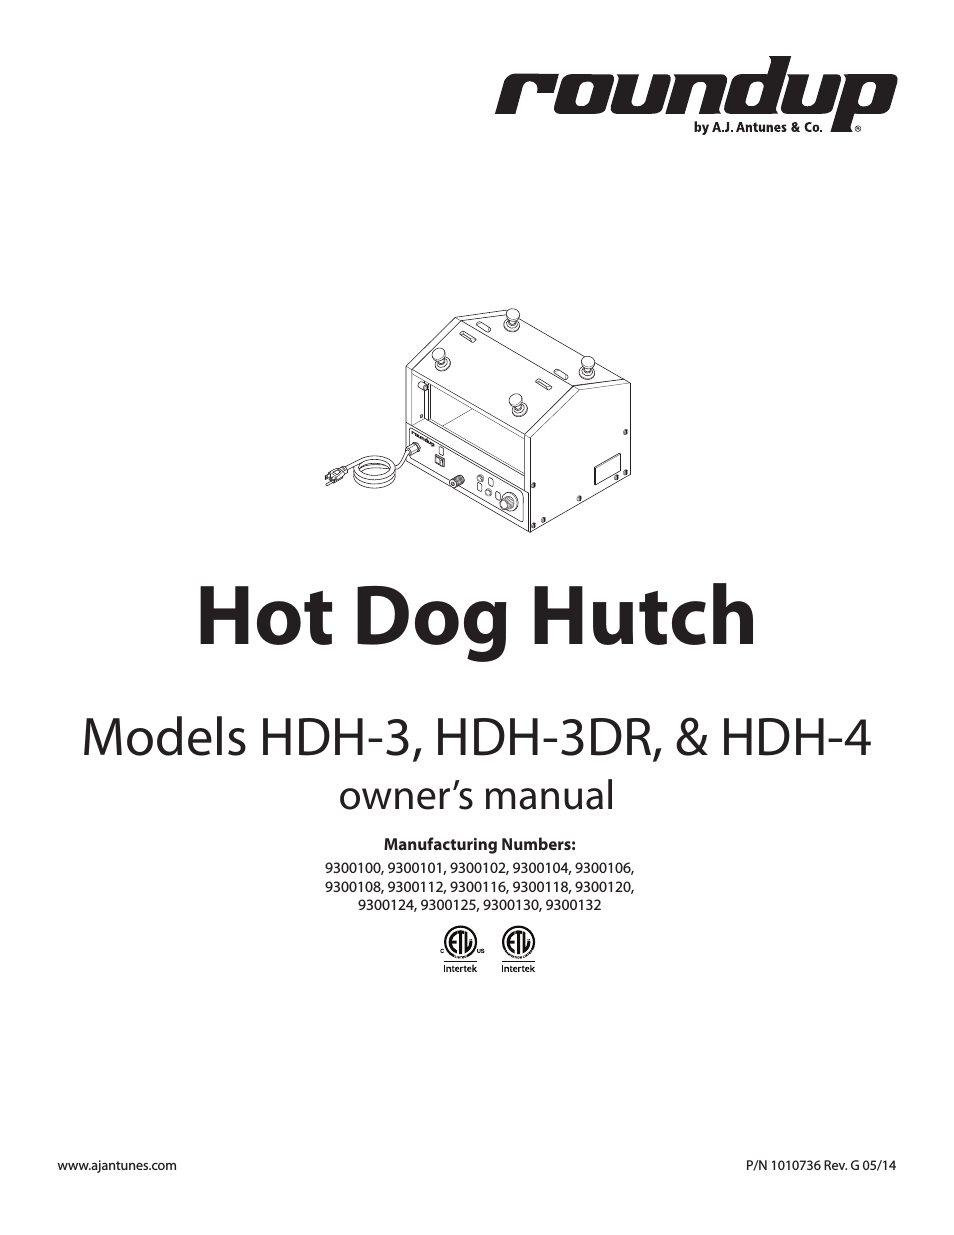 HDH-3DR 9300124